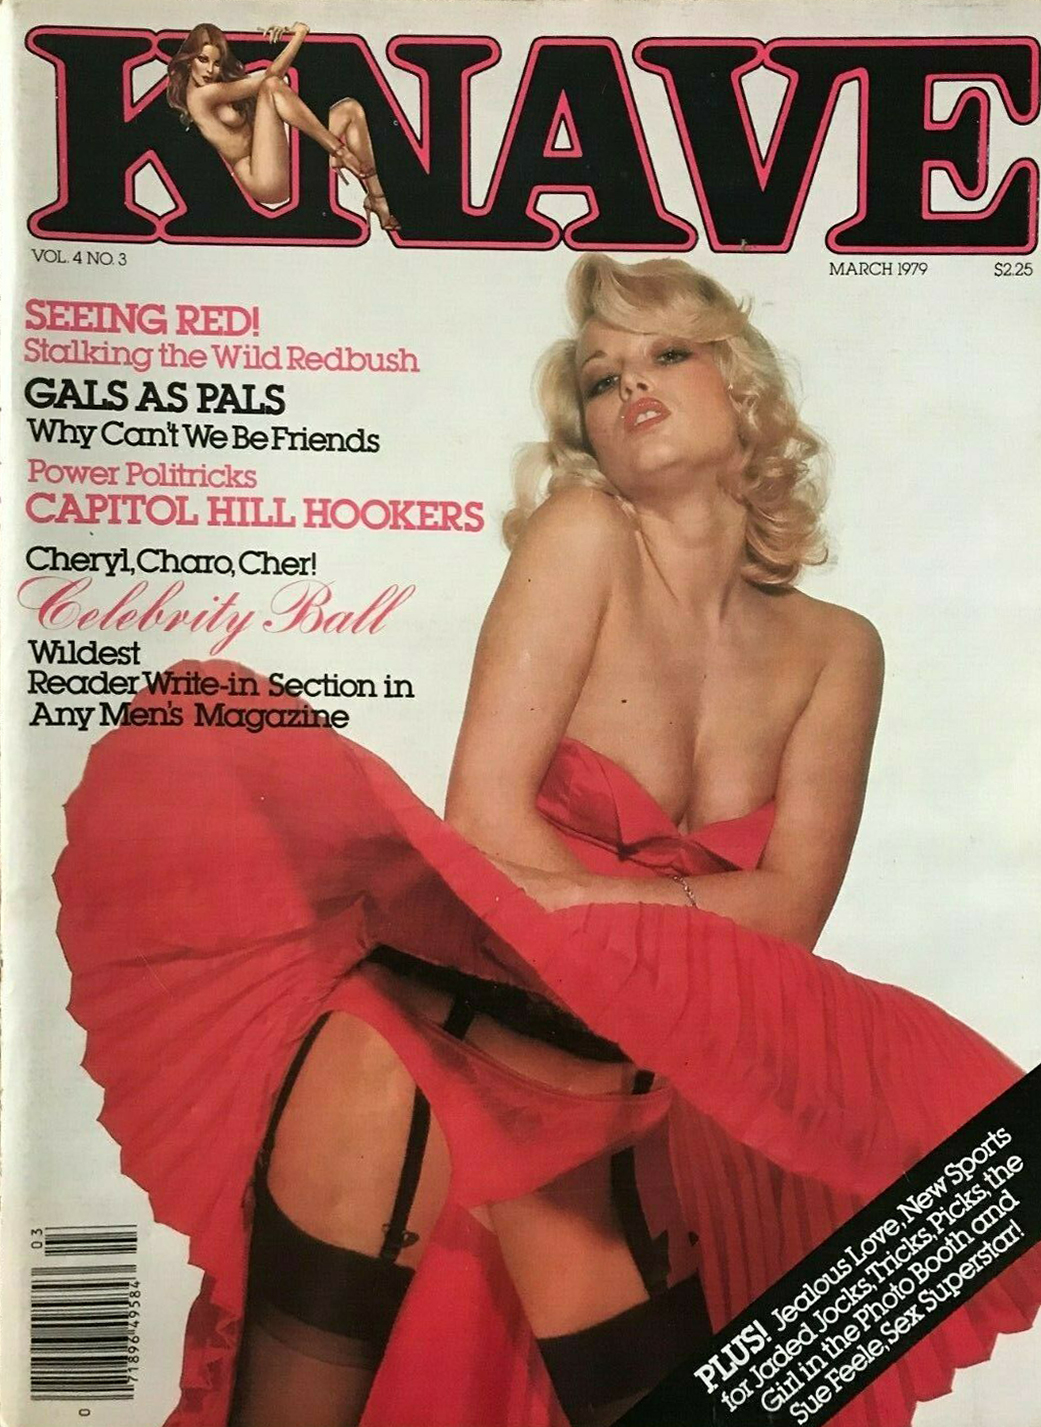 Knave Vol. 4 # 3 magazine back issue Knave UK magizine back copy Knave Vol. 4 # 3 British Adult Nude Women Magazine Back Issue Published by Galaxy Publications Limited. .